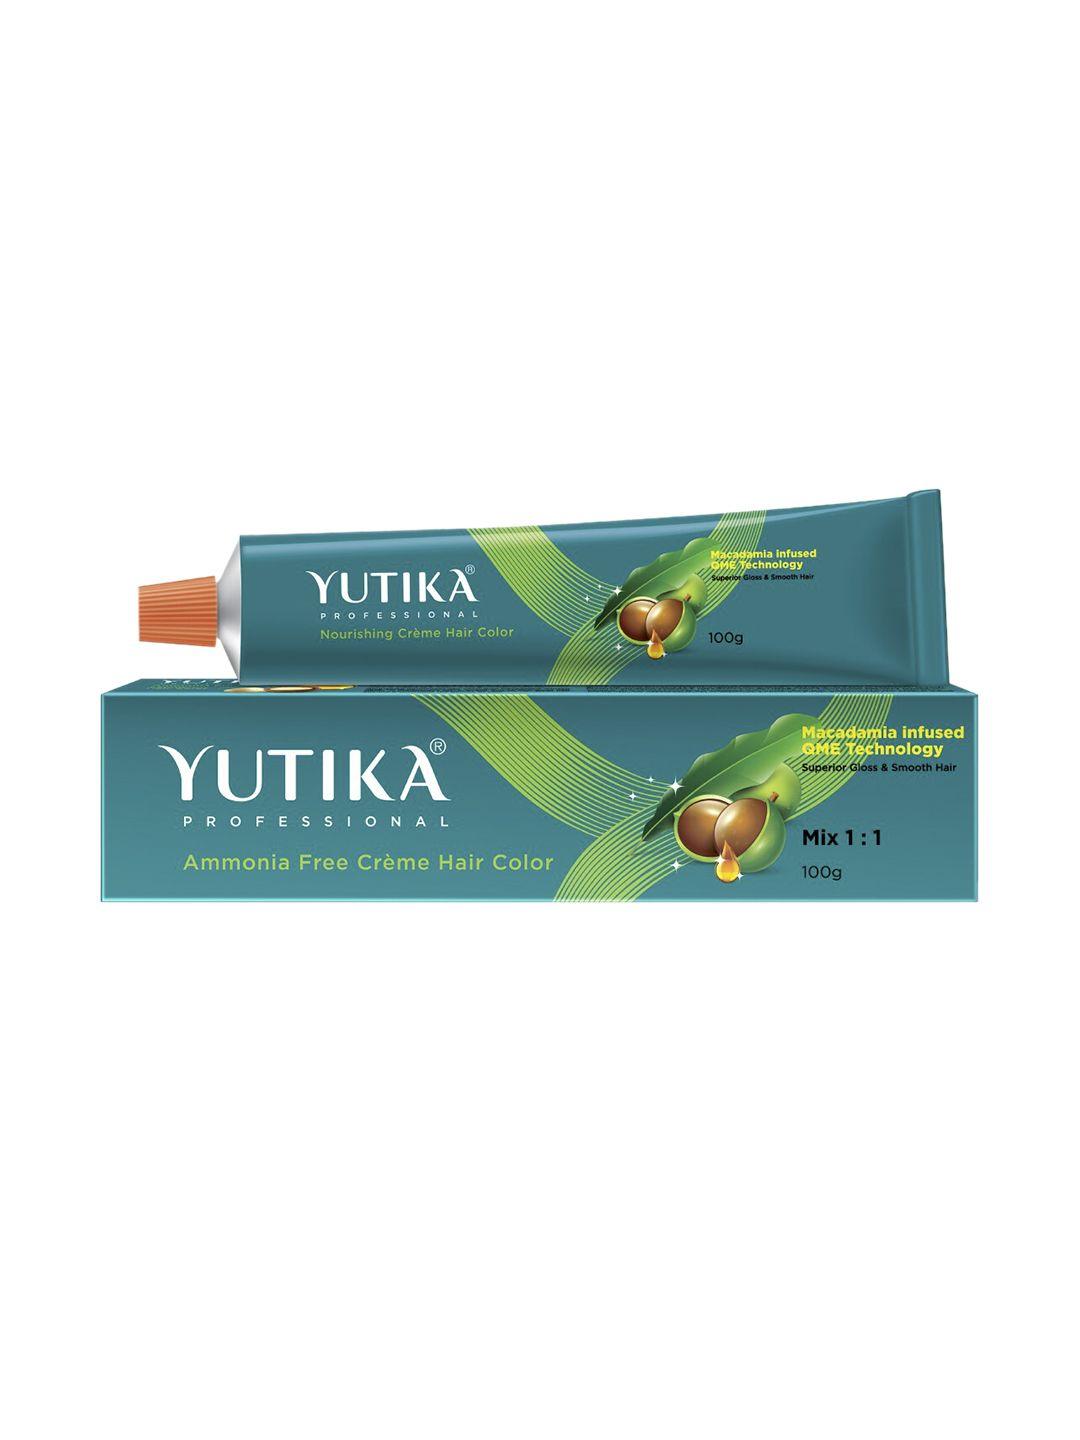 yutika-golden-brown-4.3-professional-creme-hair-color-100gm